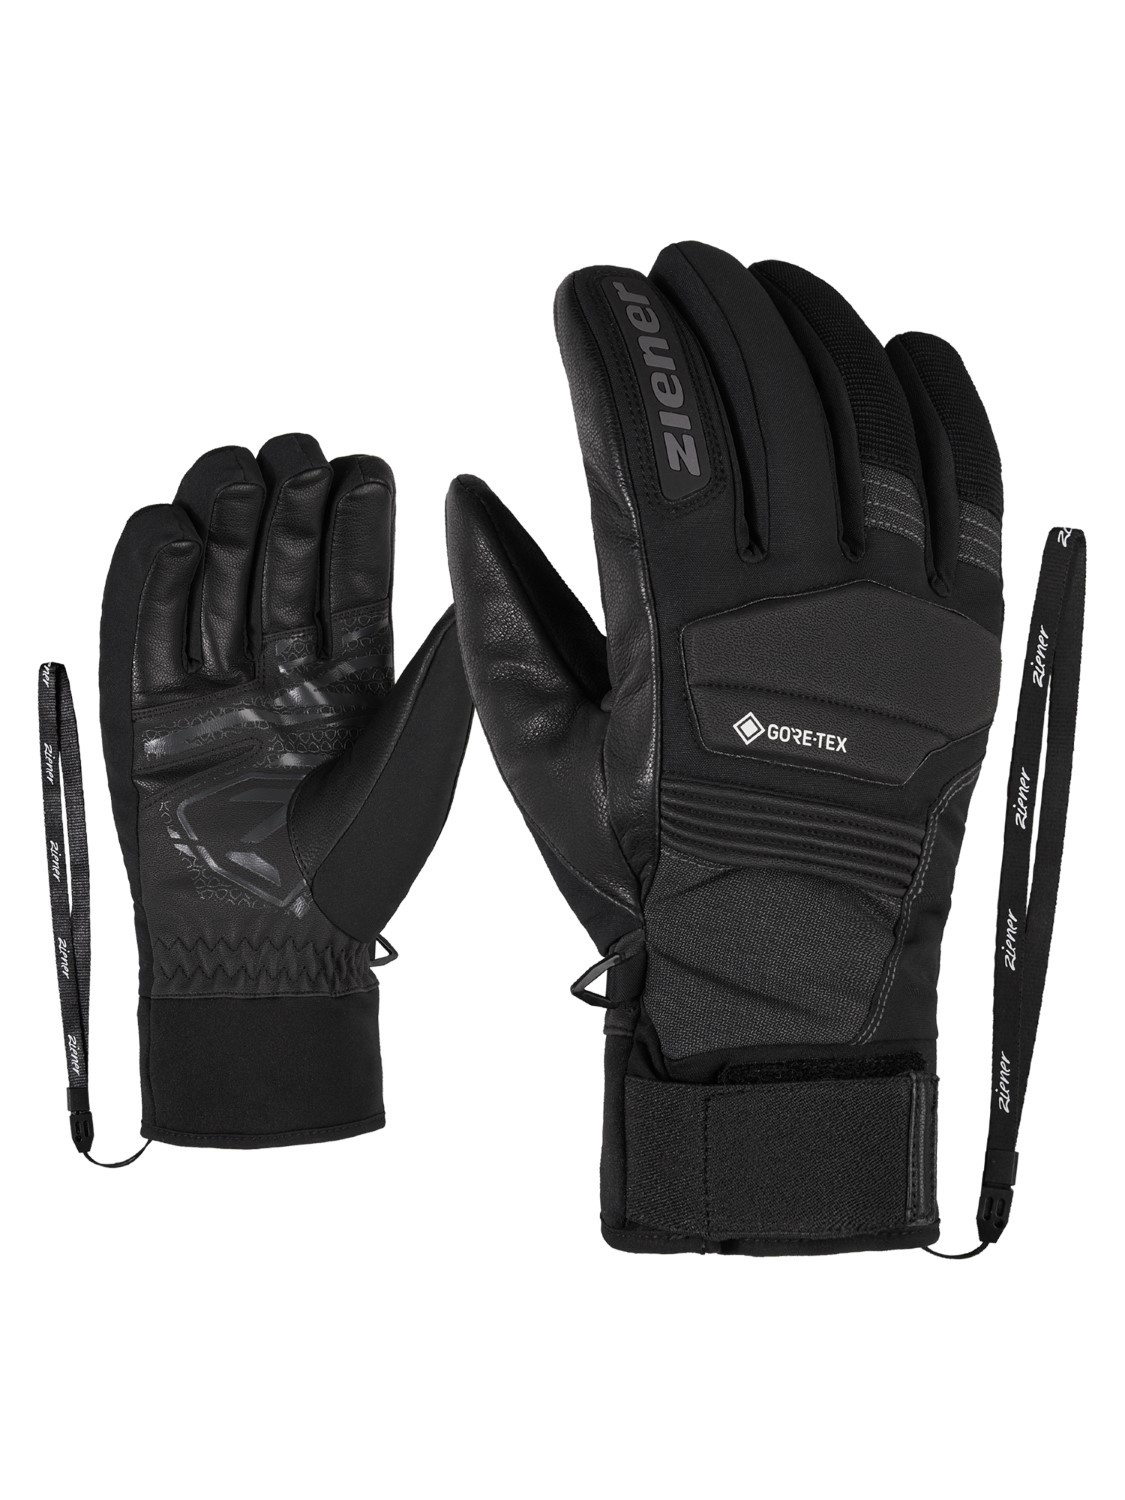 ZIENER Ski Handschuhe Gin GORETEX extra warm Primaloft schwarz 12 neu 